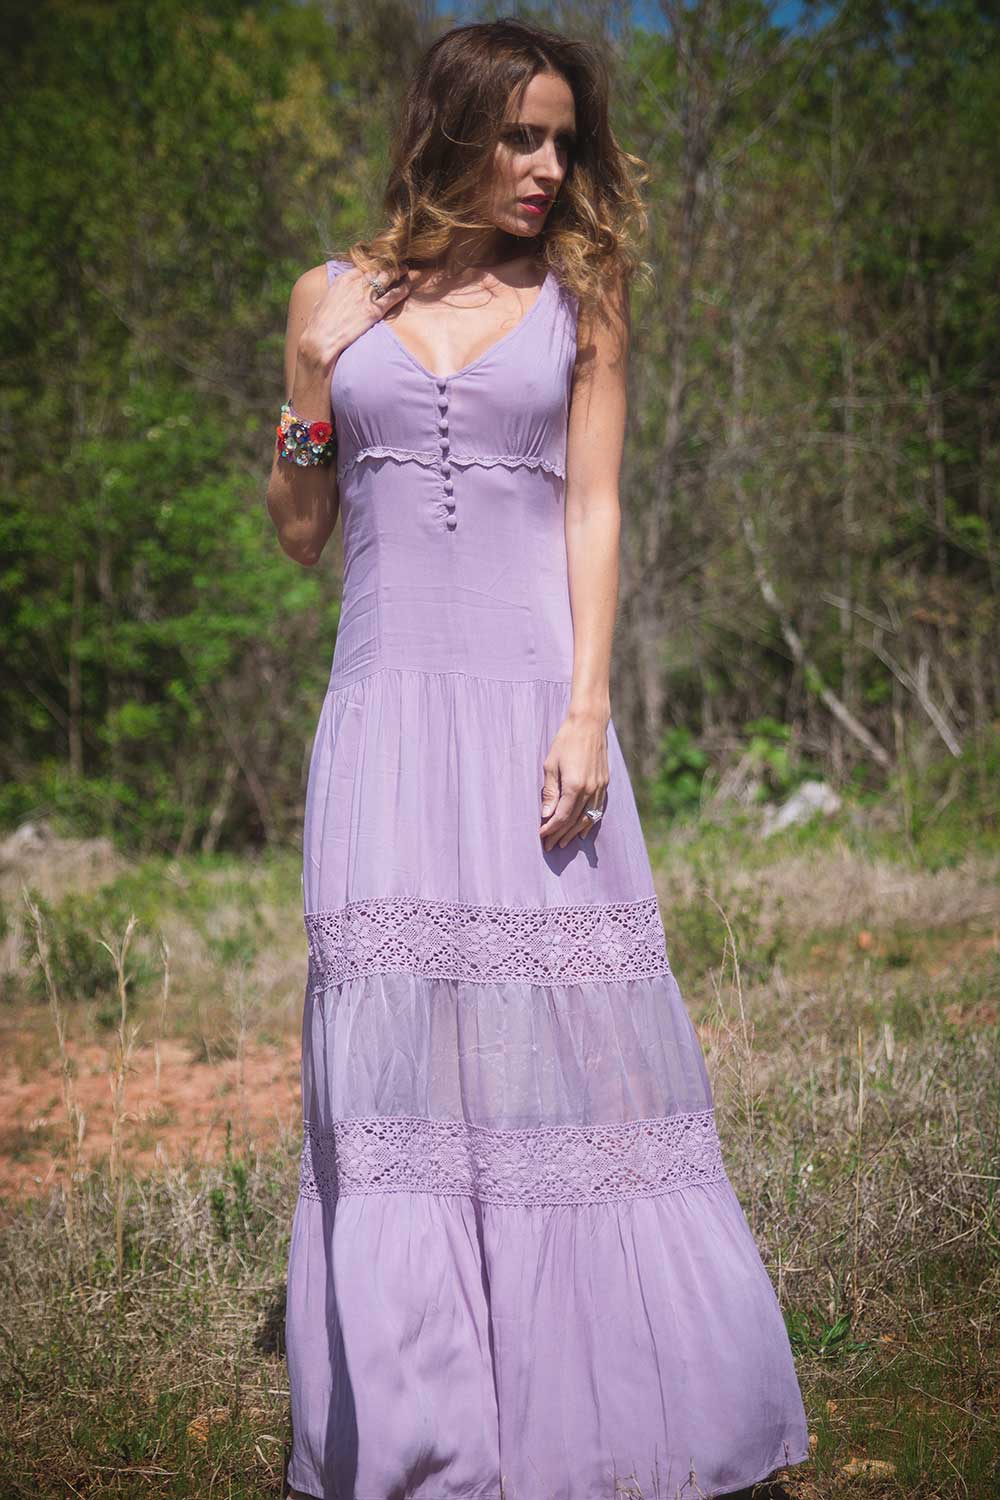 Lifestyle Blogger Samantha Busch in a lilac purple dress.